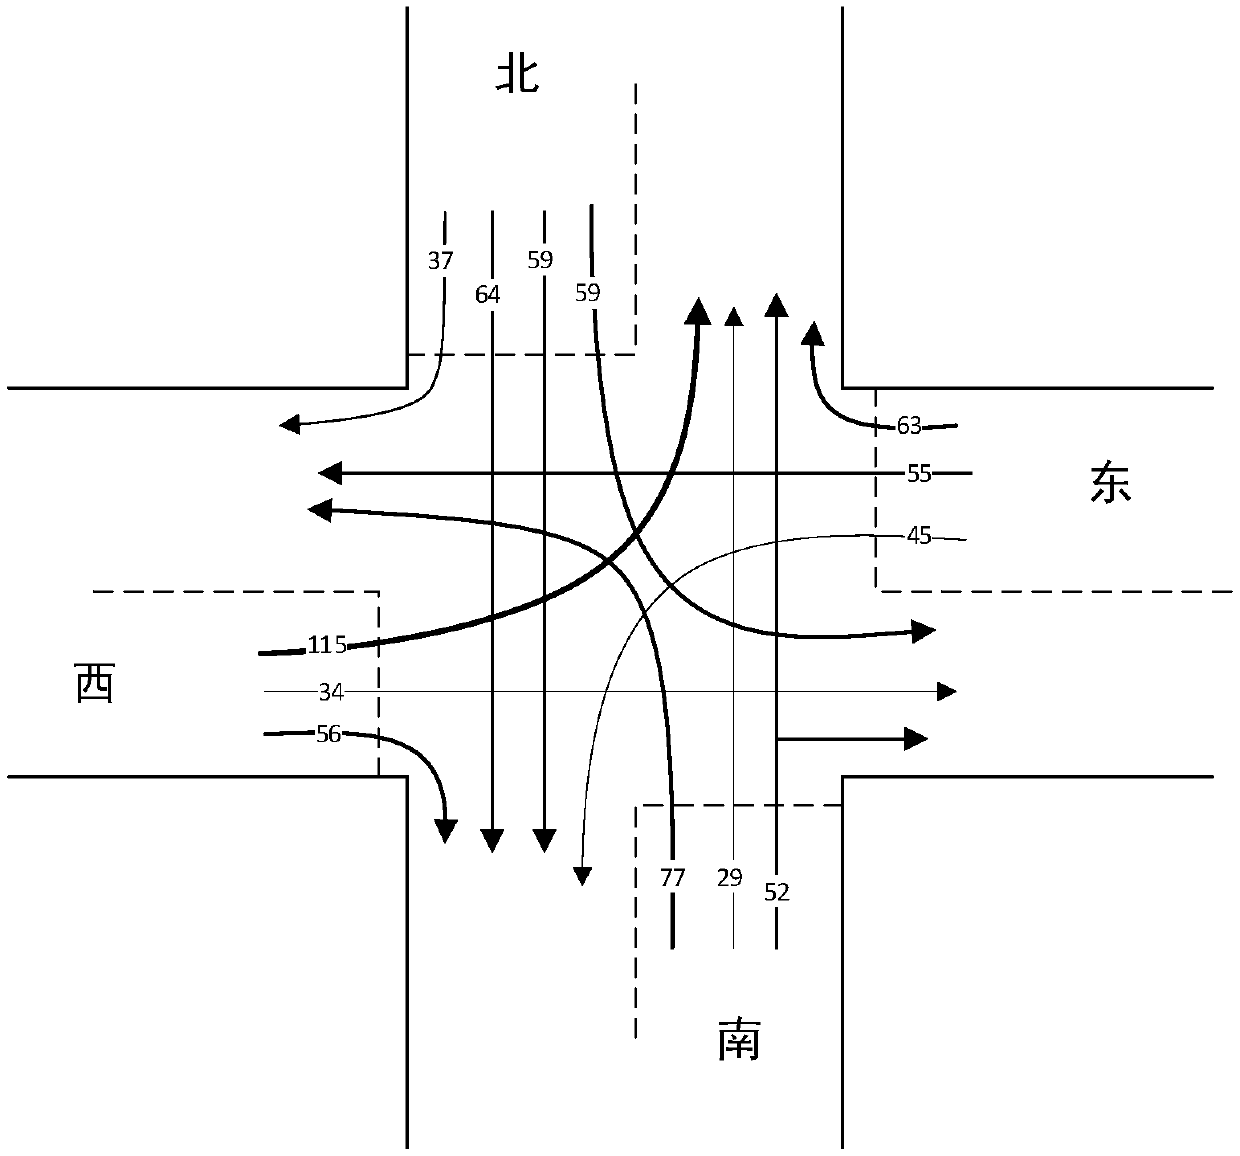 Crossing signal phase scheme green light duration allocation method